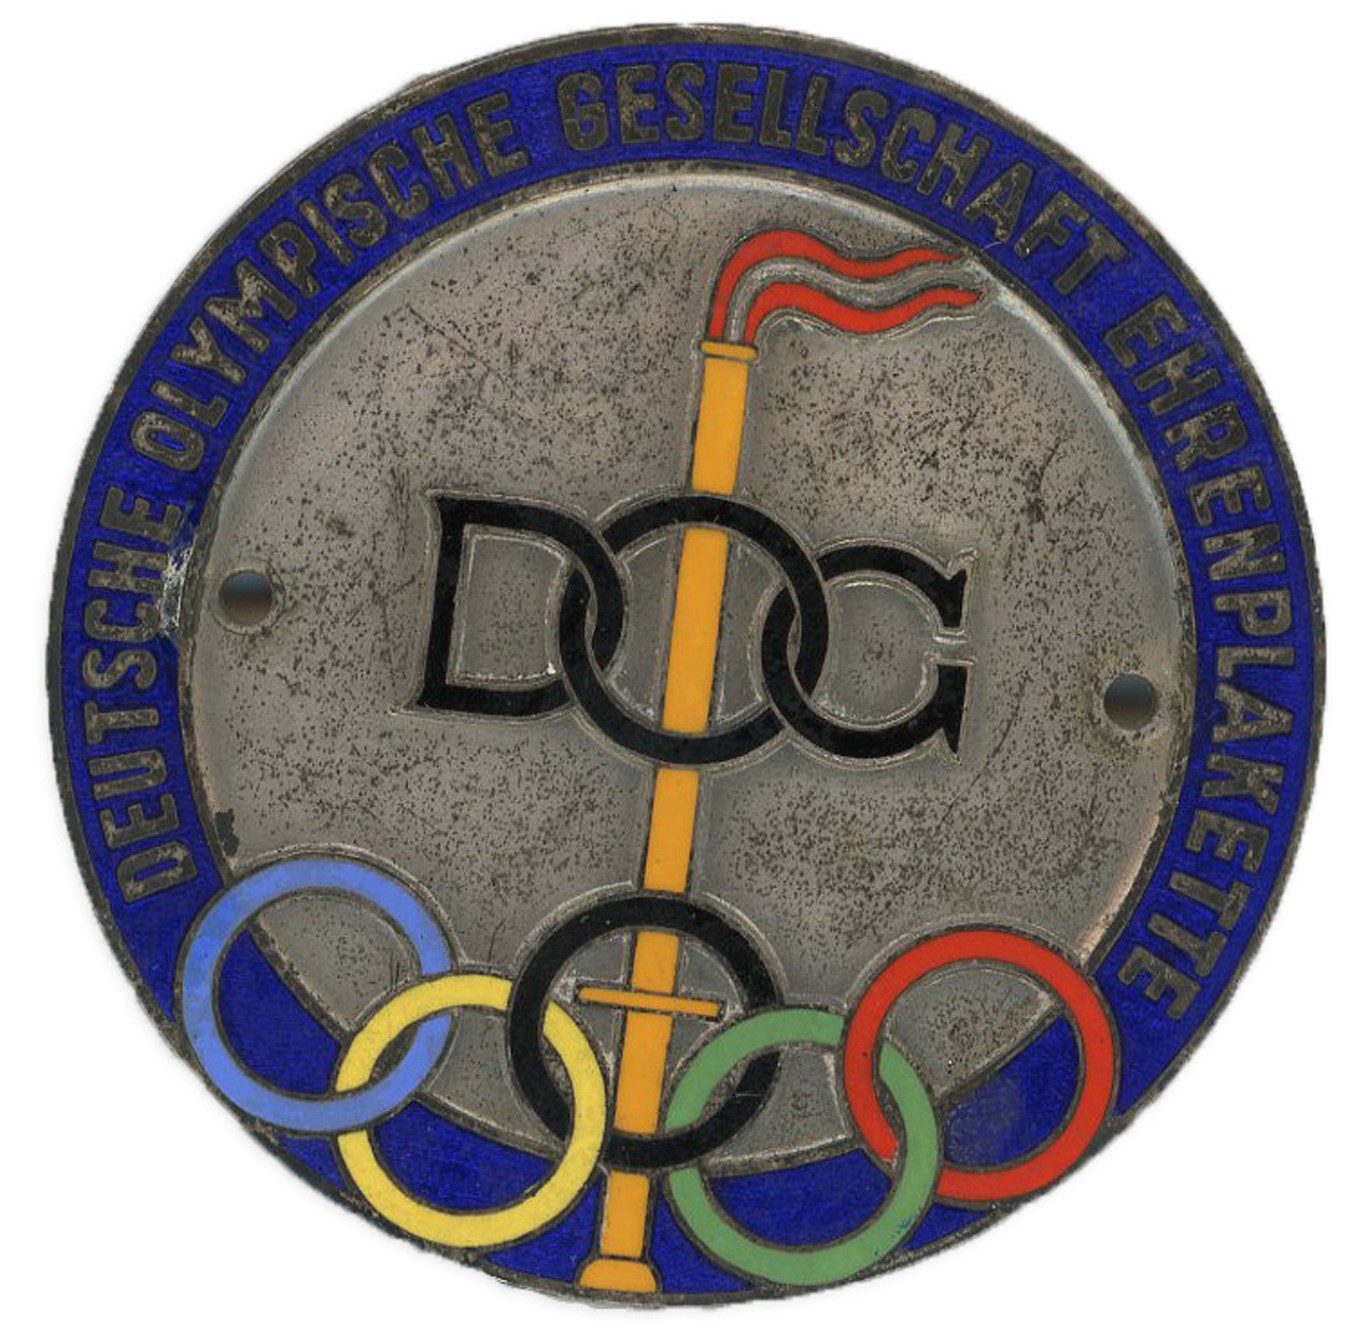 - 1936 Berlin Olympics Enamel Card Badge for "German Olympic Torch Leader"